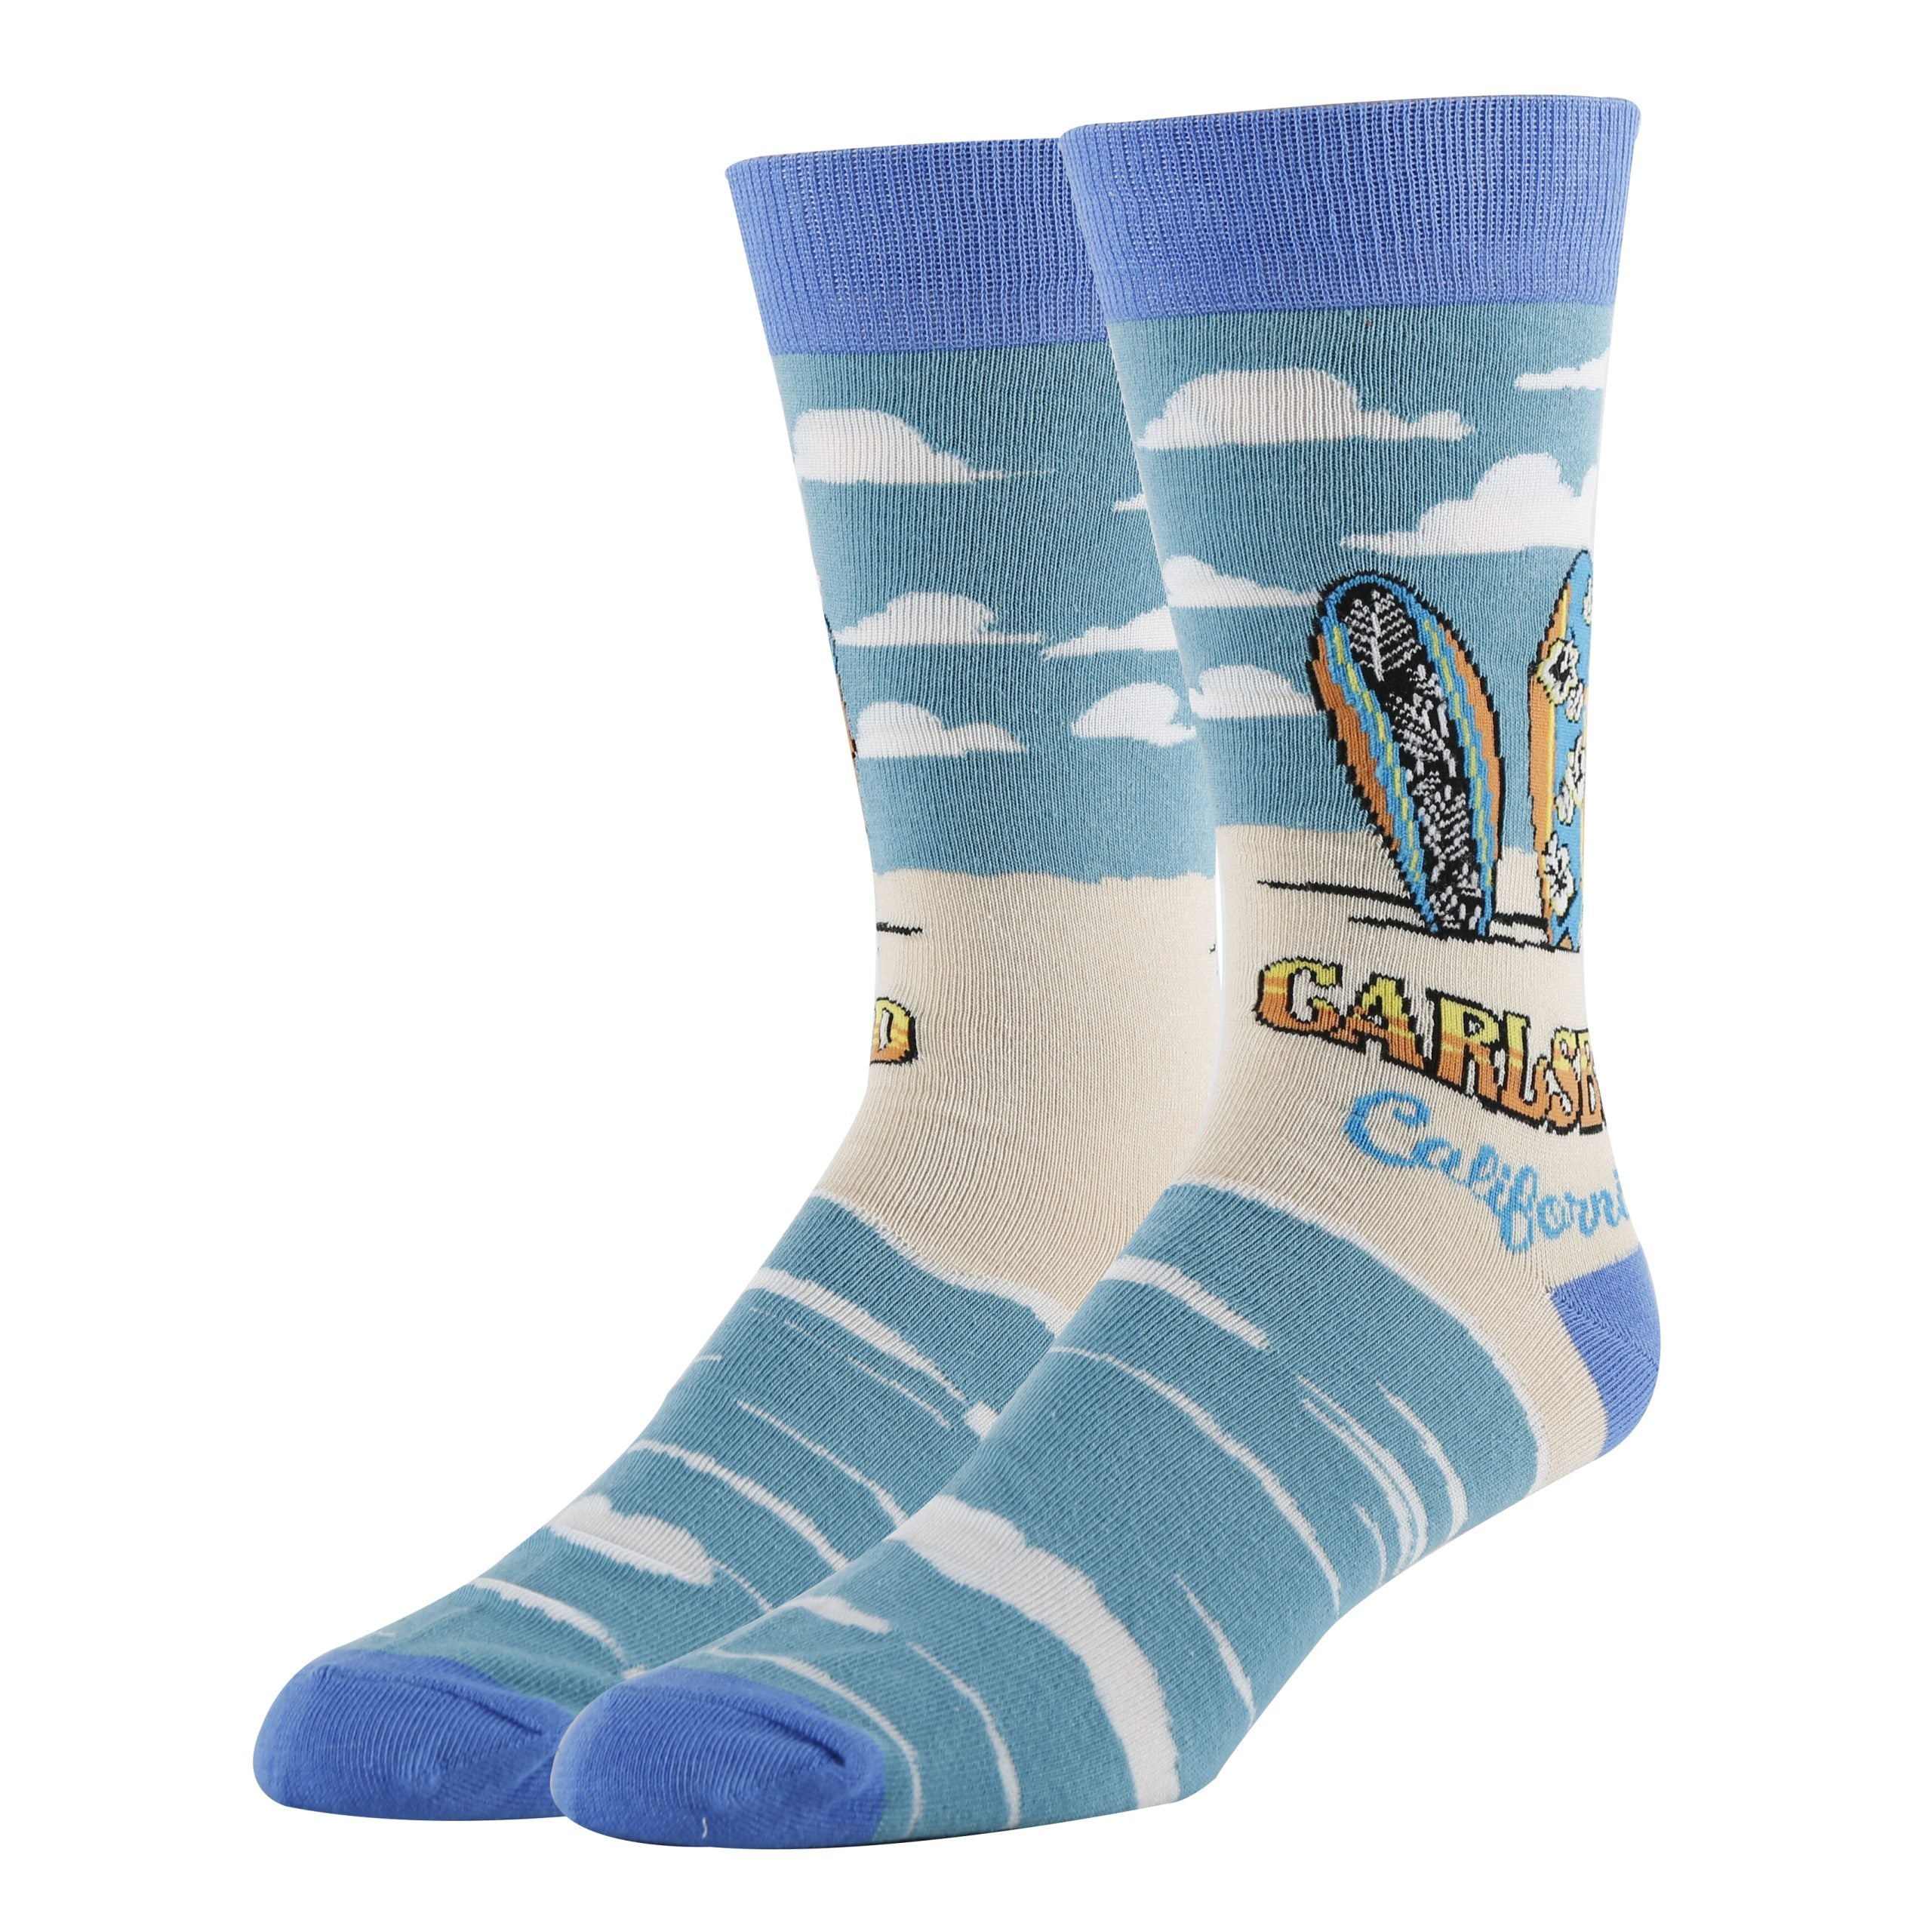 Calrsbad Socks | Funny Crew Socks for Men